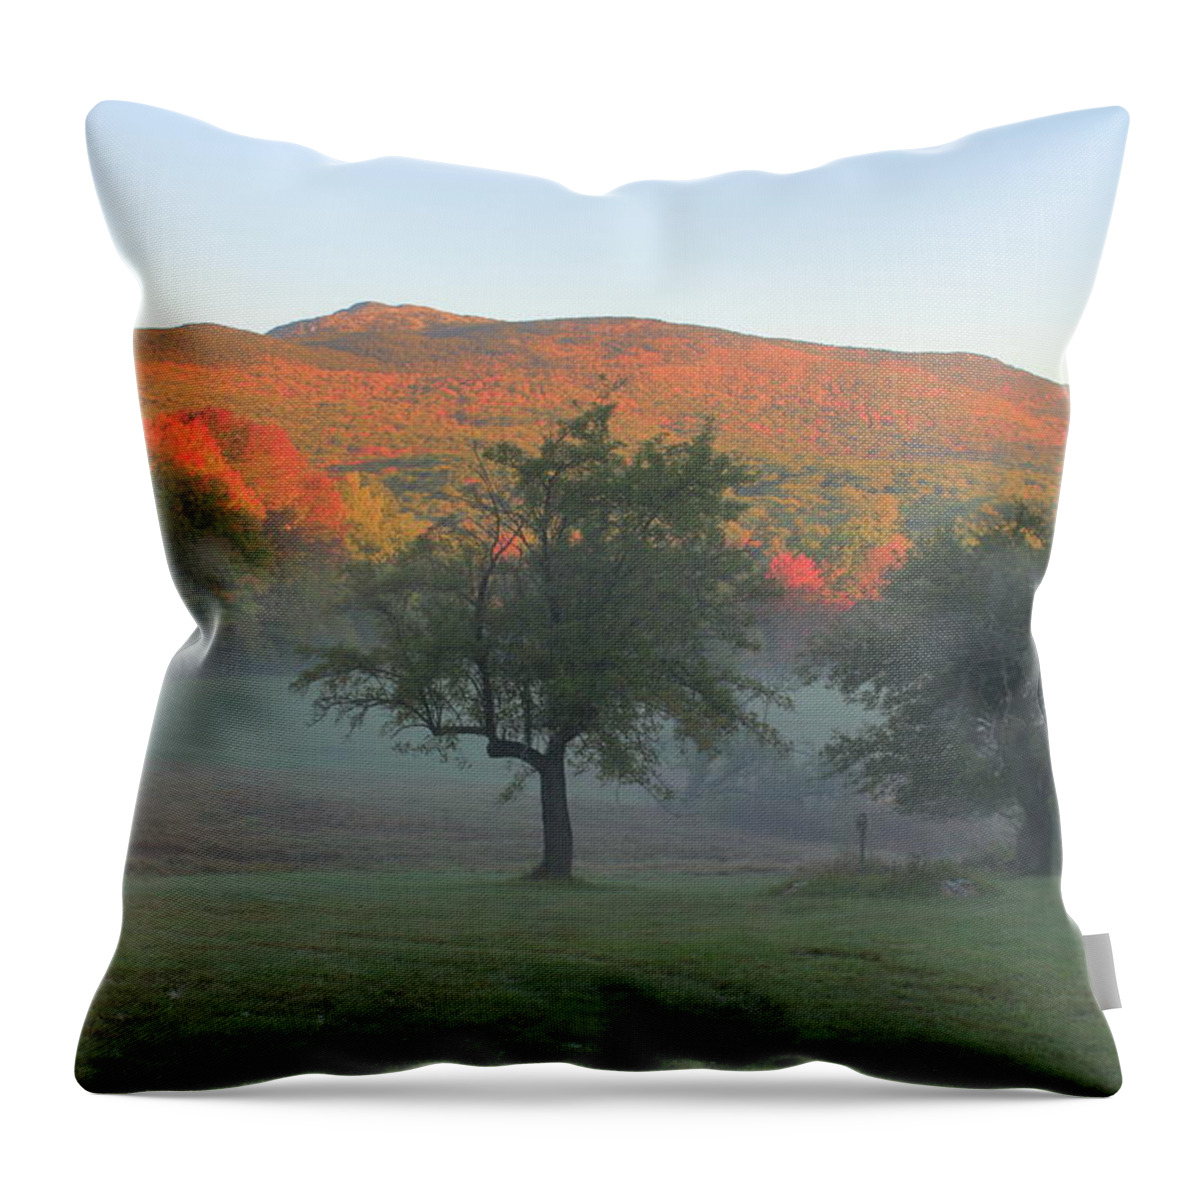 Mount Monadnock Throw Pillow featuring the photograph Mount Monadnock Autumn Morning by John Burk